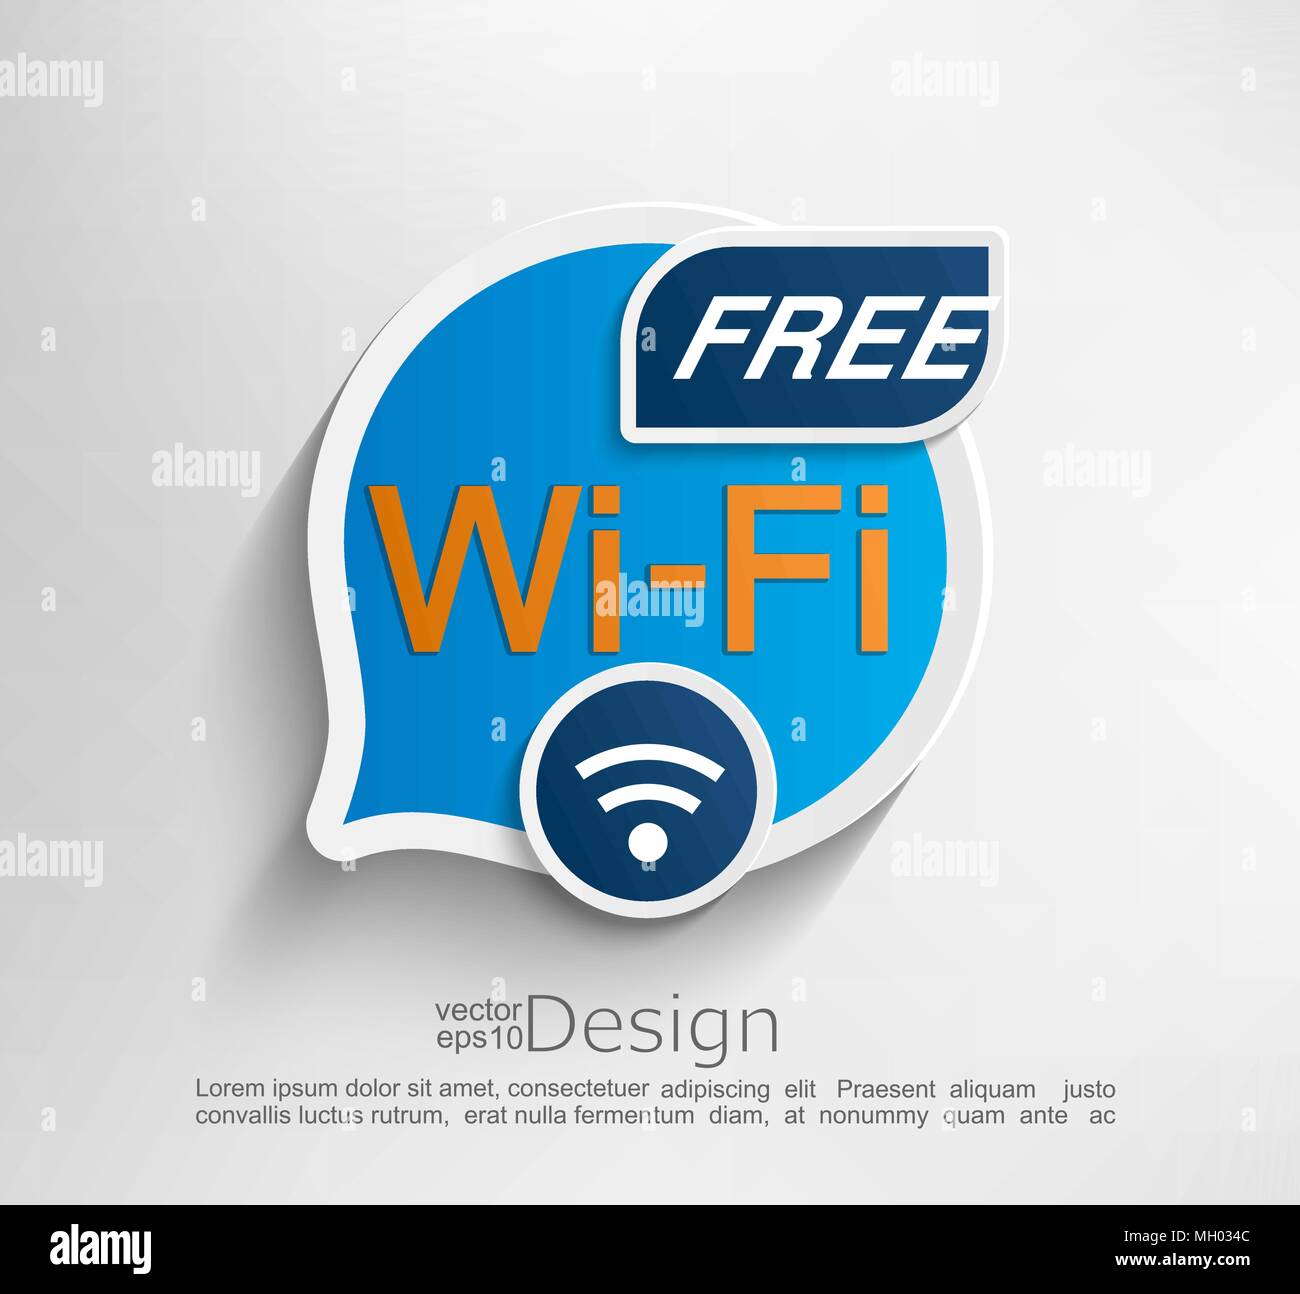 Free wifi symbol, emblem or sticker vector illustration. Stock Vector